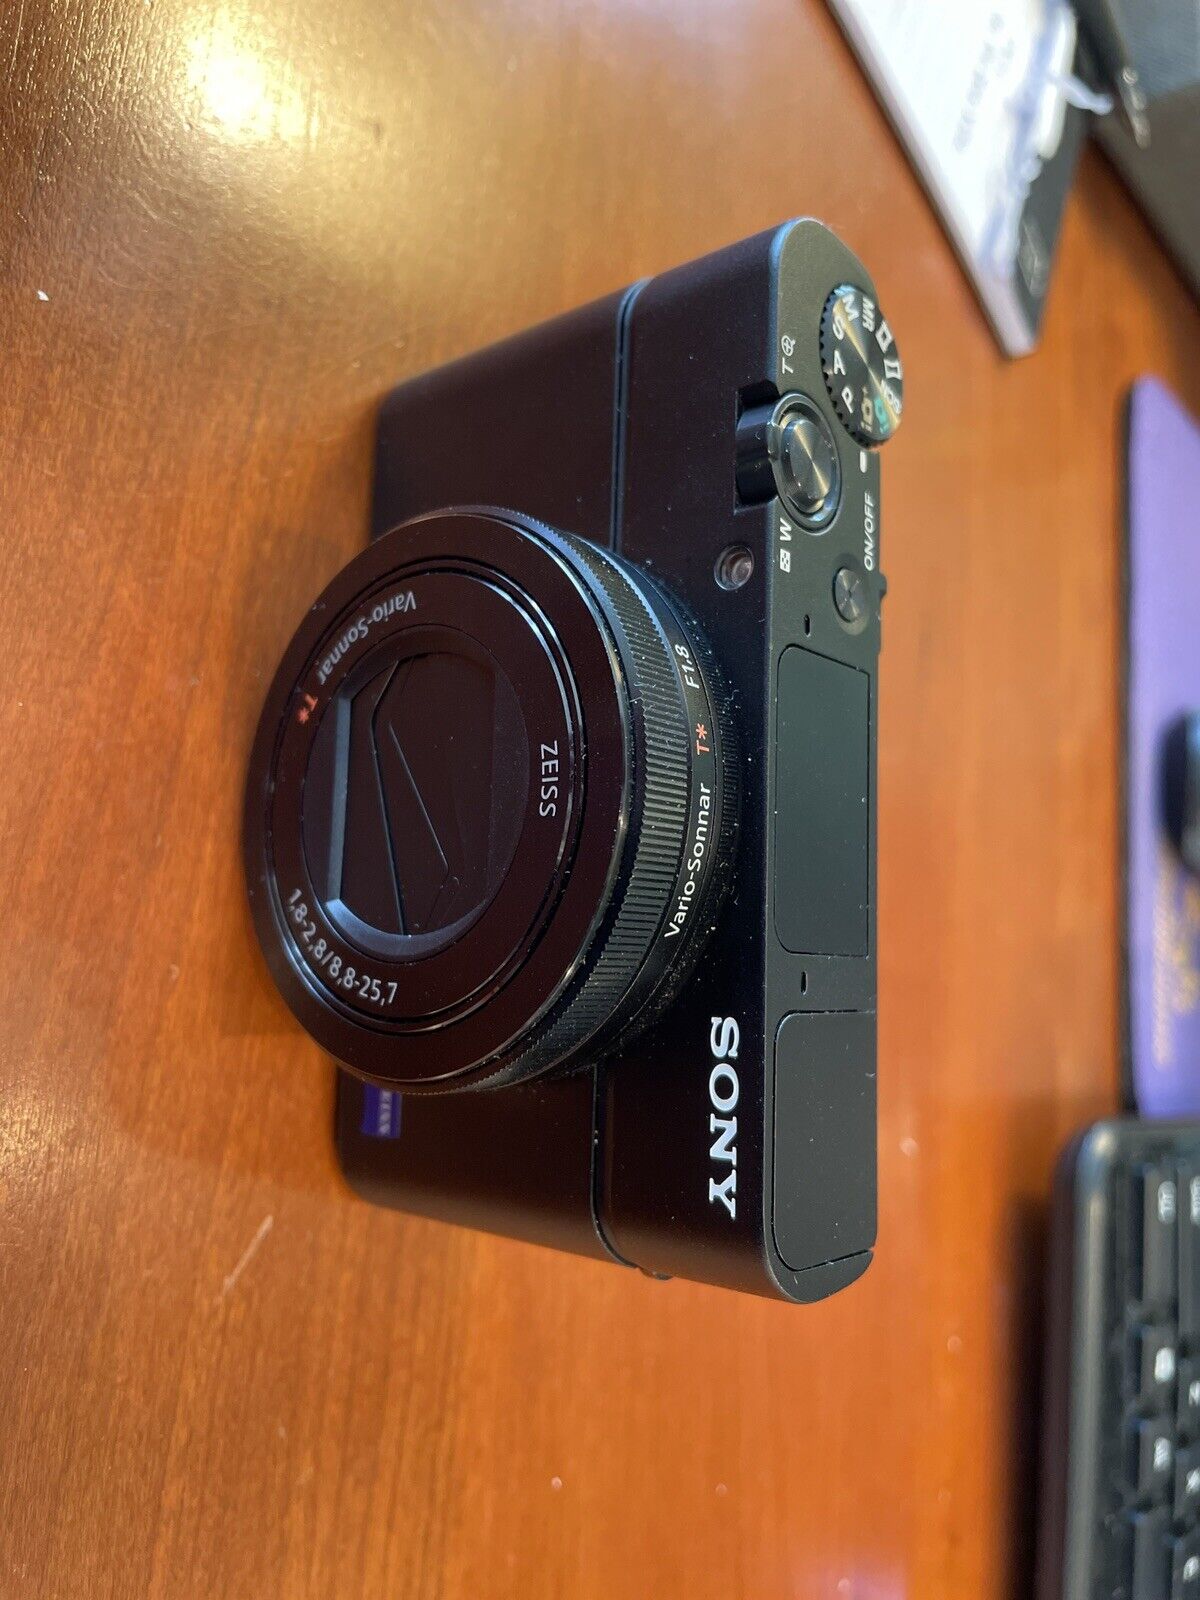 Sony DSC-RX100 III 20.1 MP Digital SLR Camera - Black And Cary Case